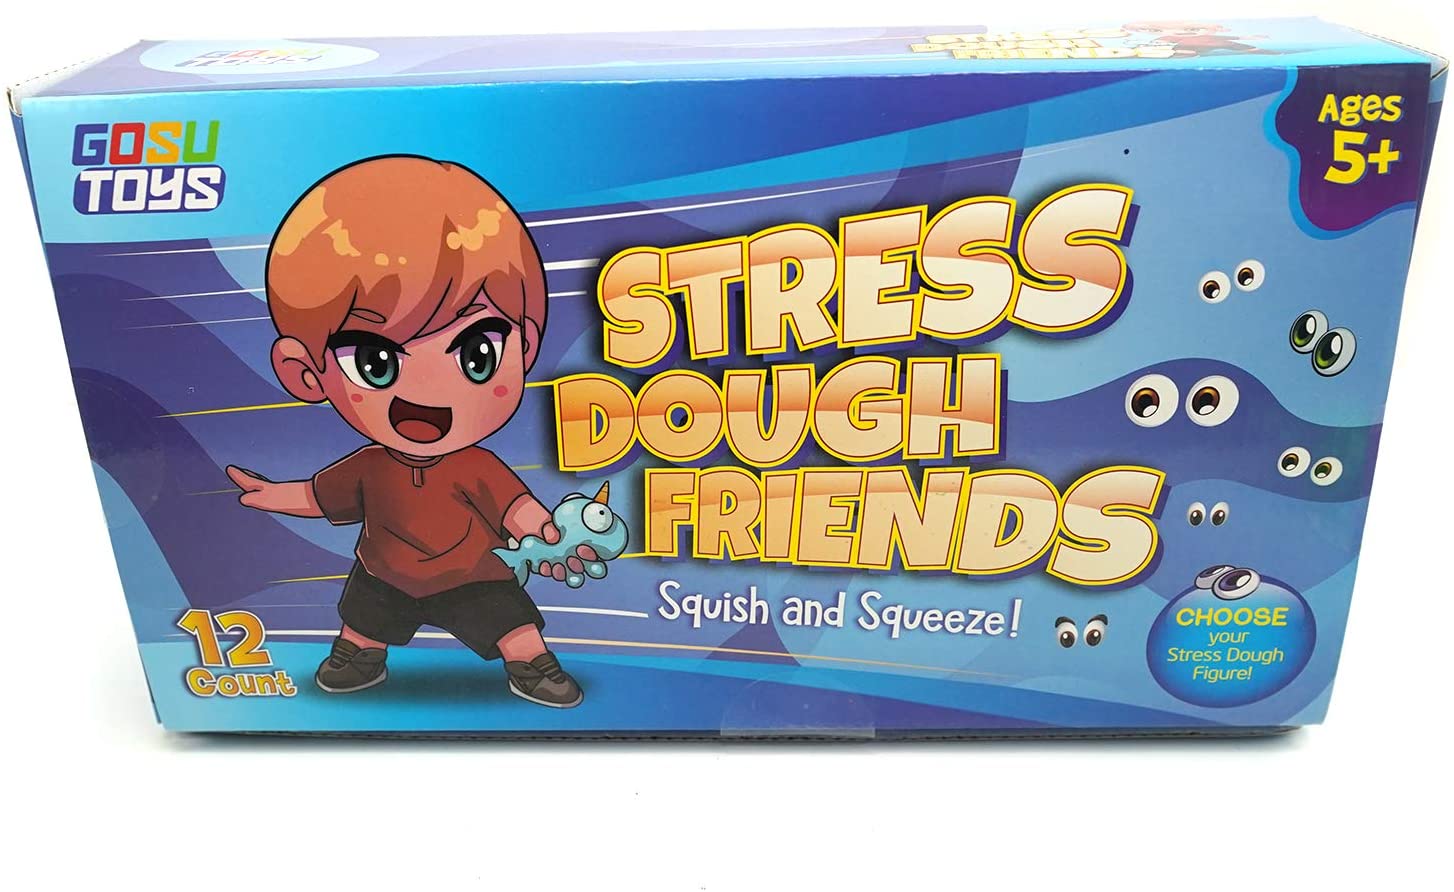 Gosu Toys Stress Dough Friends Soft Stress Balls Stretchy Dough Ball! (12 Pack Box)